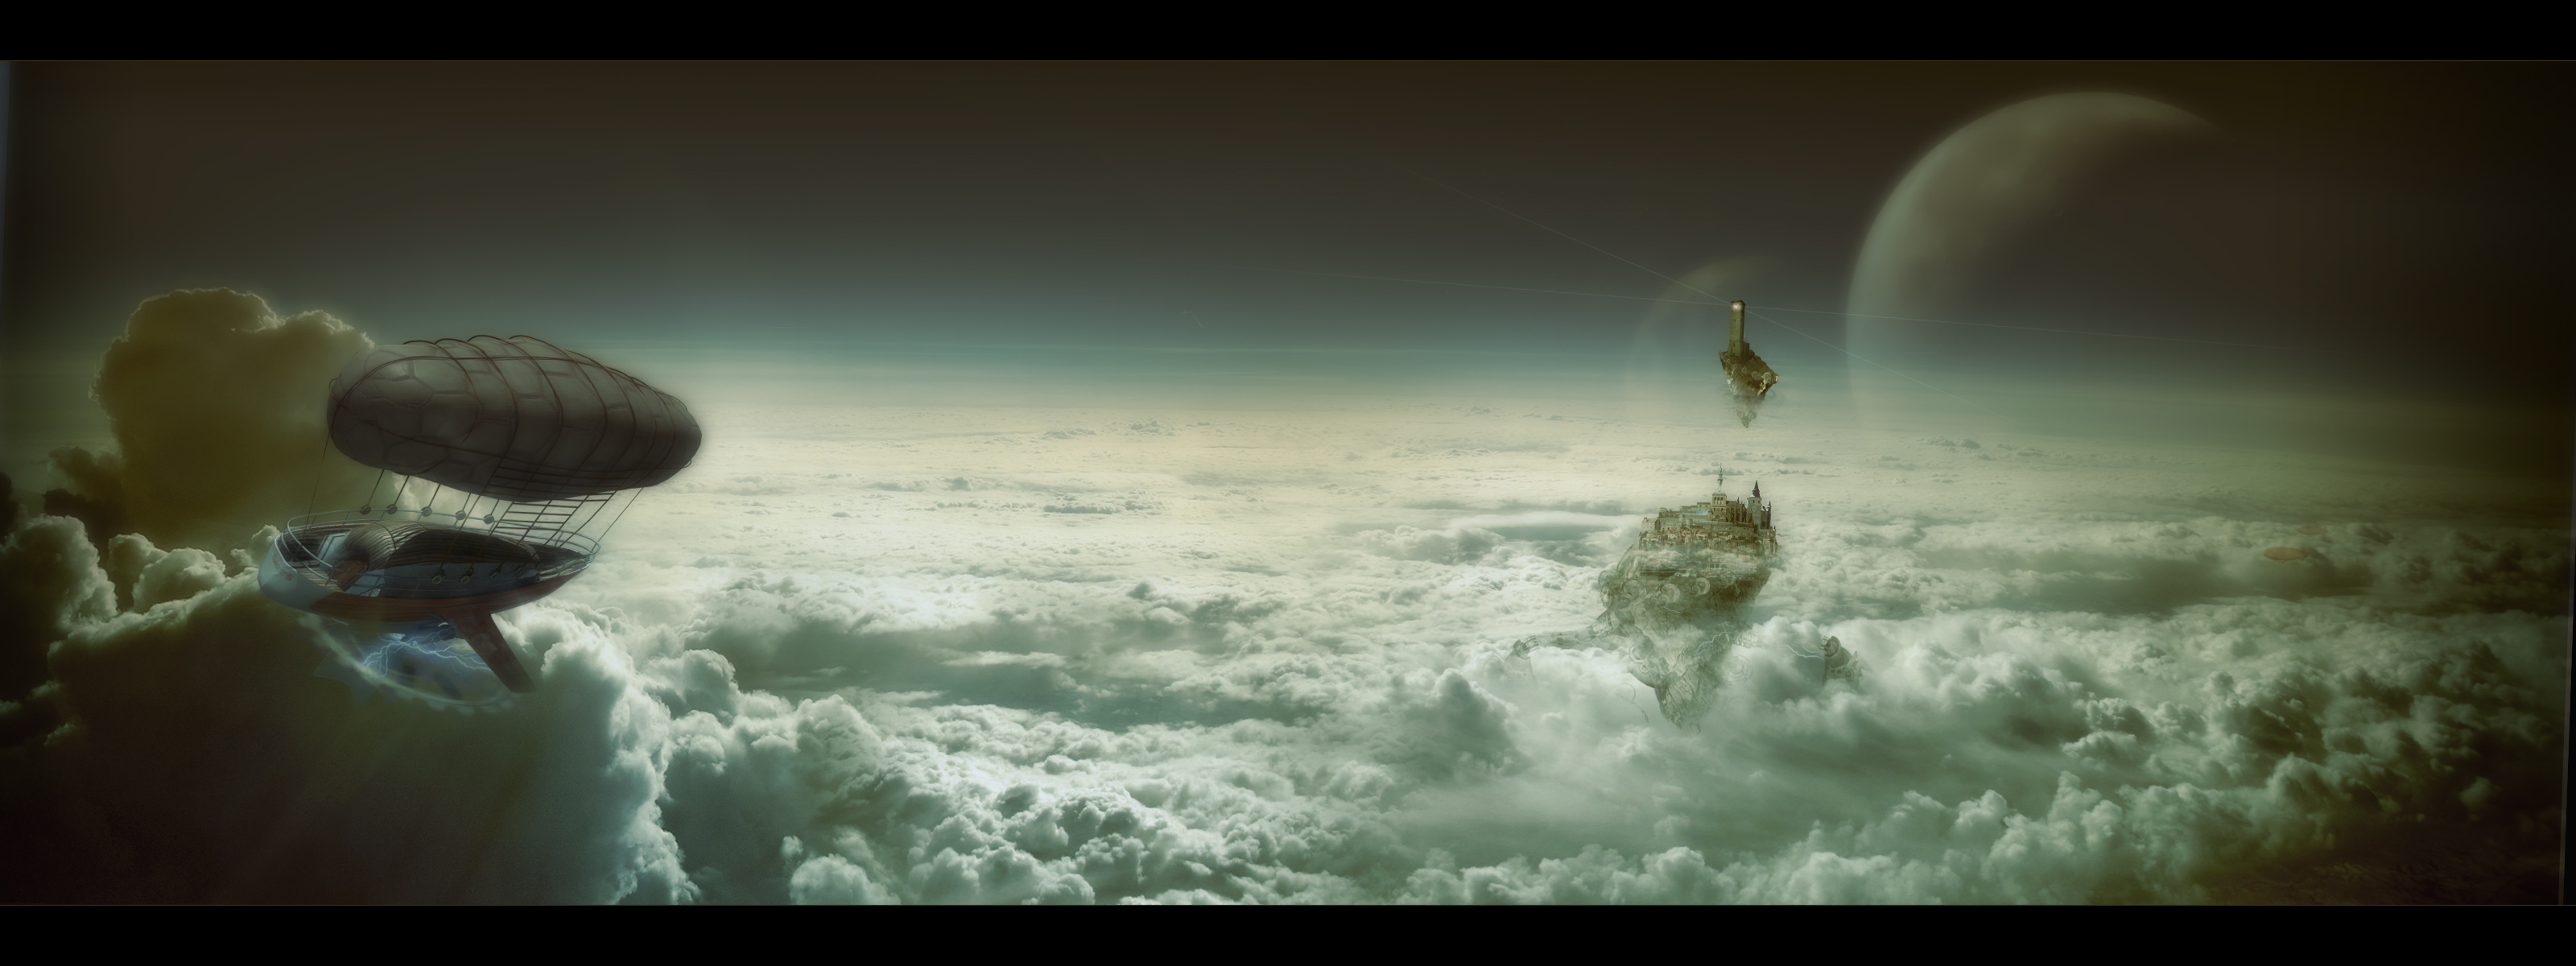 Fantasy Sky HD Wallpaper | Background Image